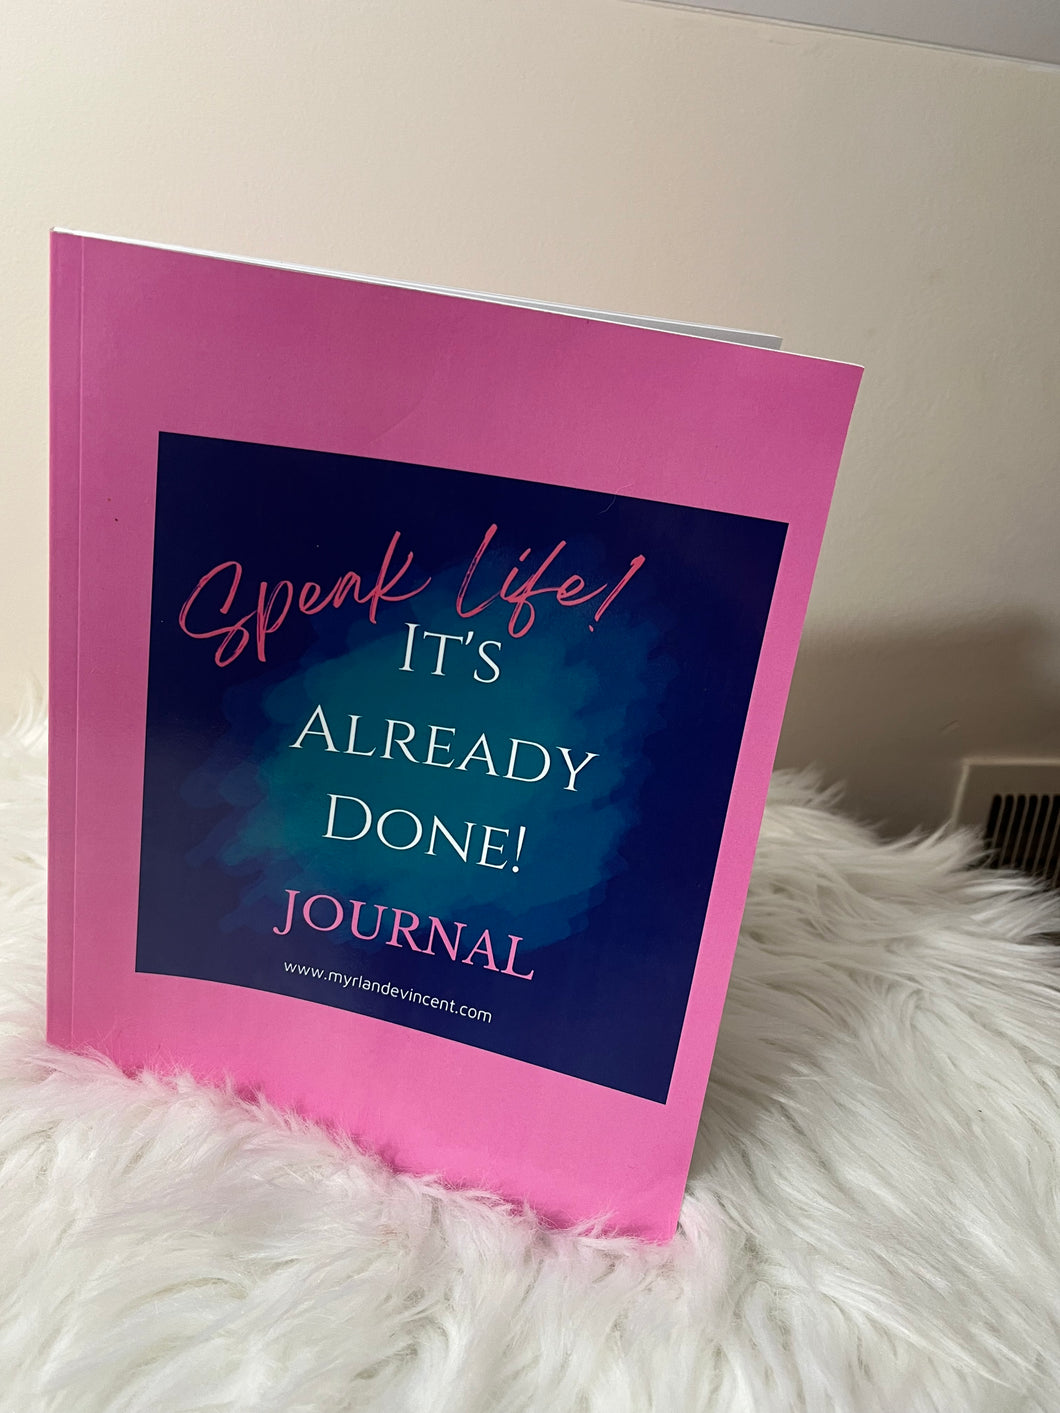 Speak life. It’s already done journal